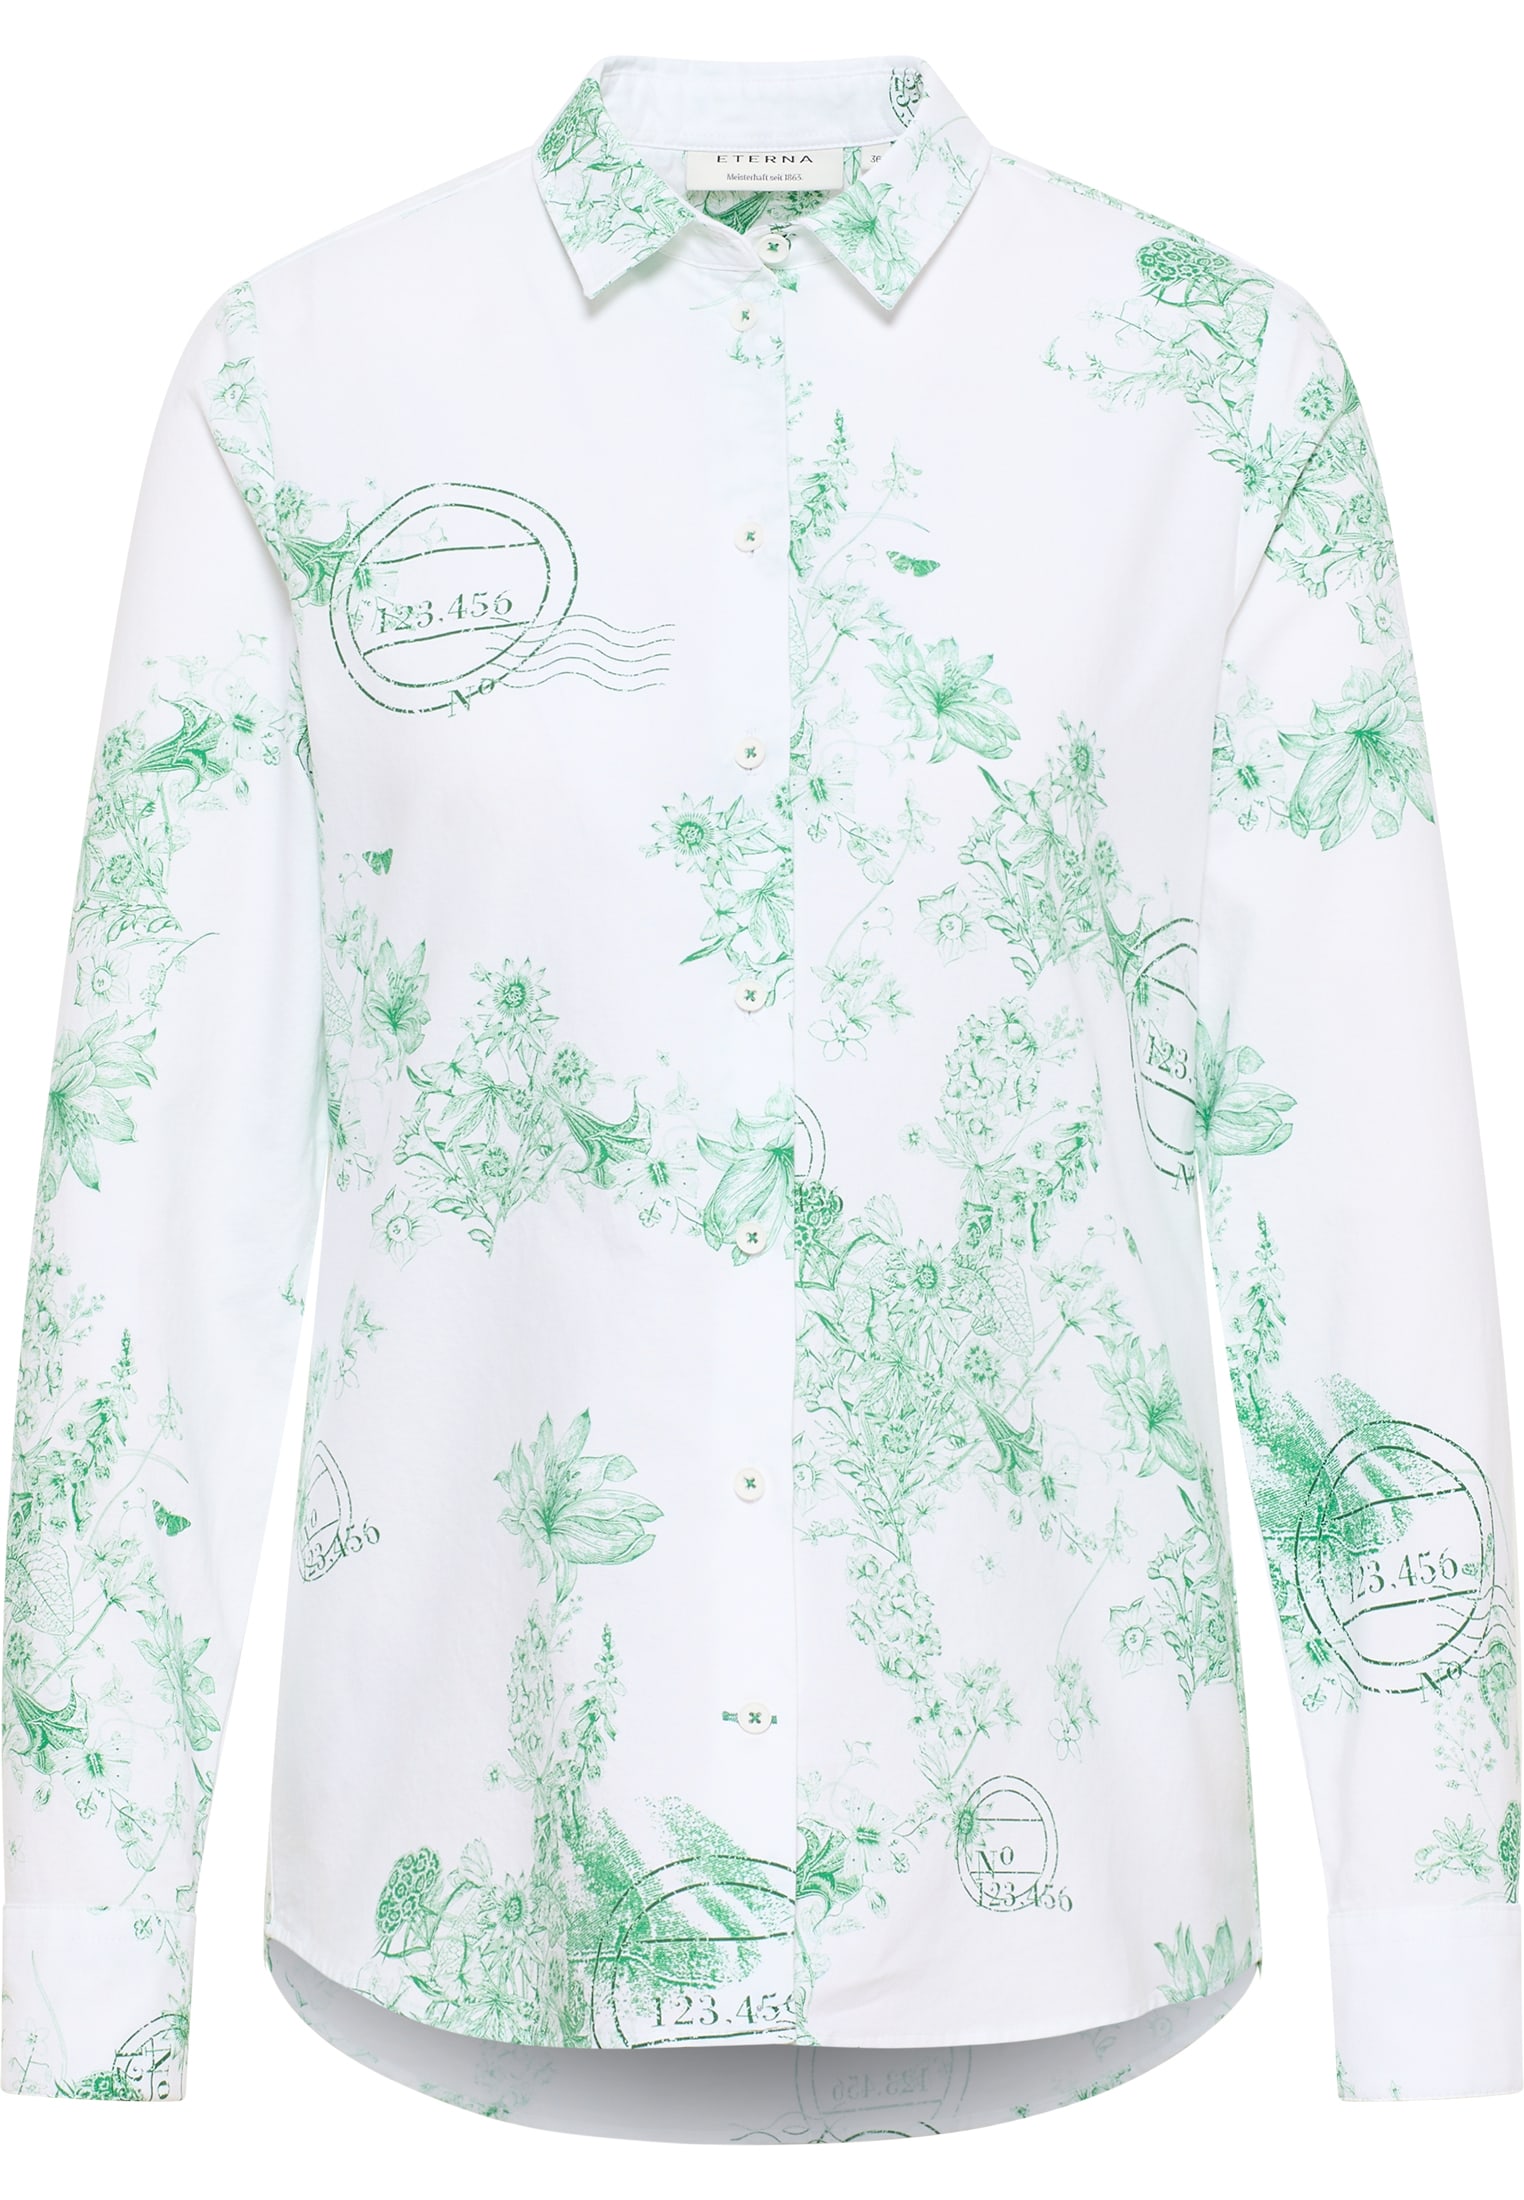 | in grün Shirt 2BL04169-04-01-44-1/1 | grün Oxford Bluse | 44 bedruckt Langarm |